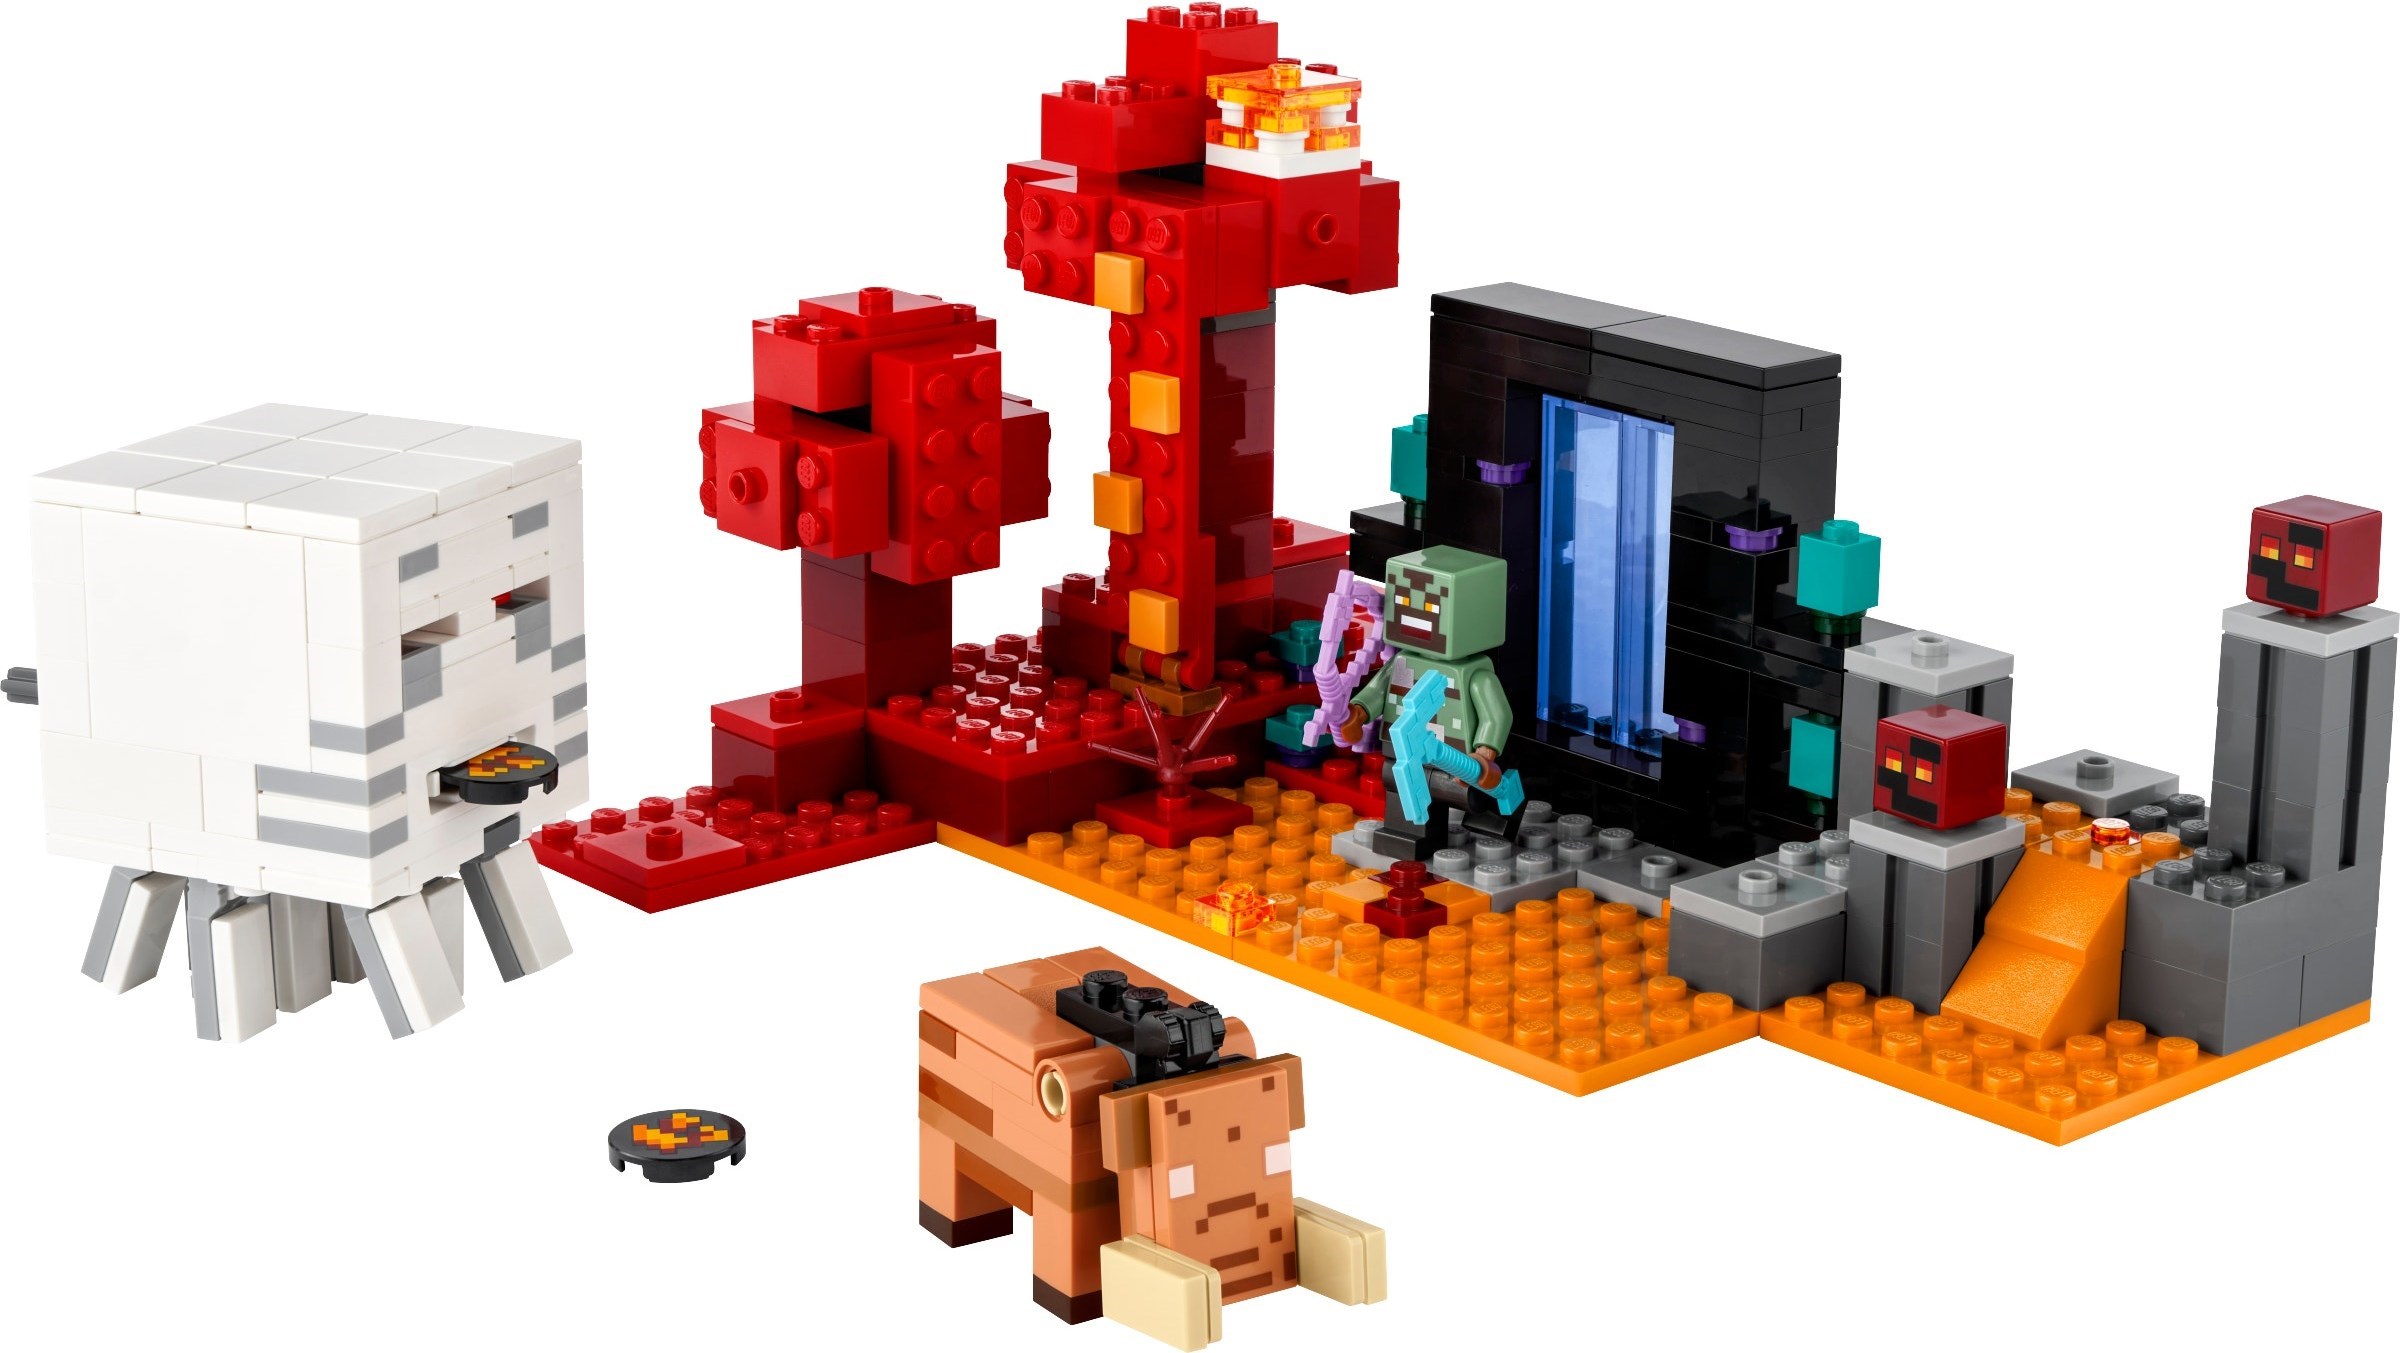 LEGO Minecraft 2024